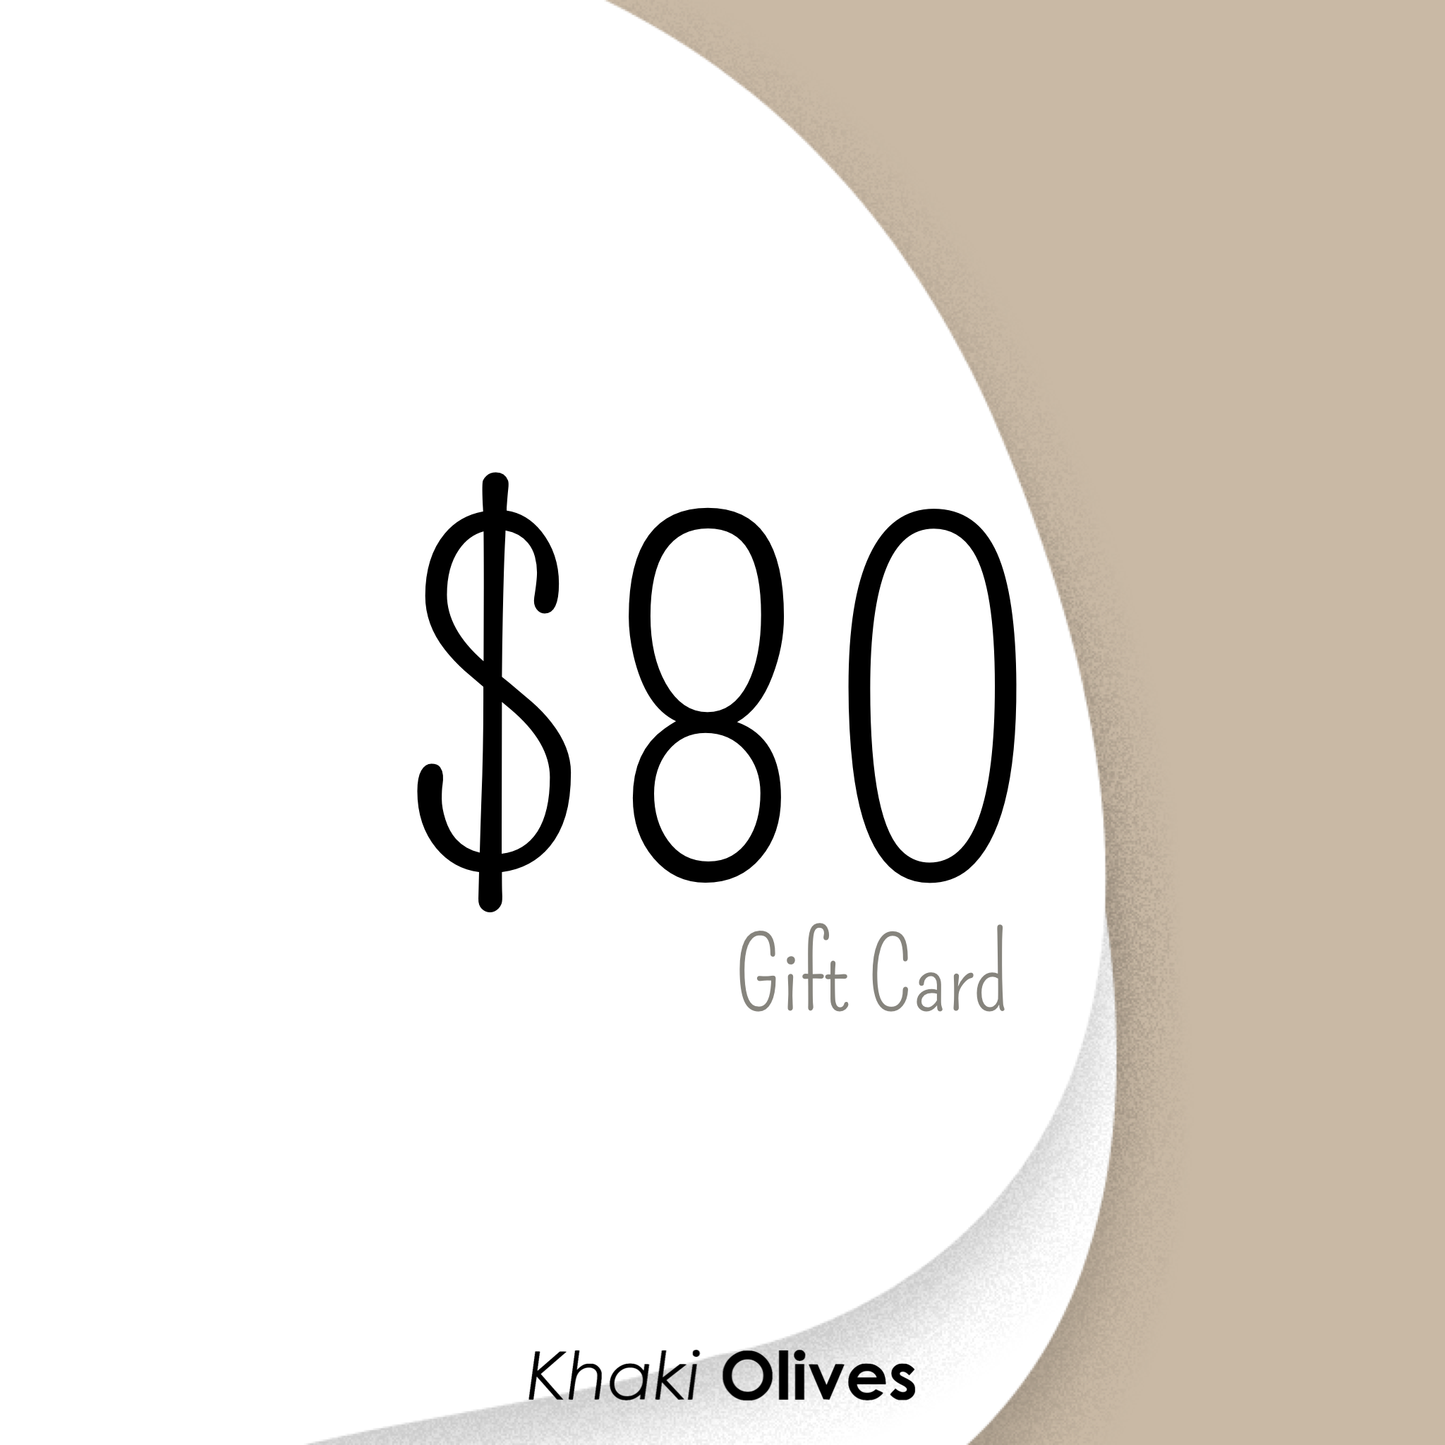 Khaki Olives e-Gift Card - $80